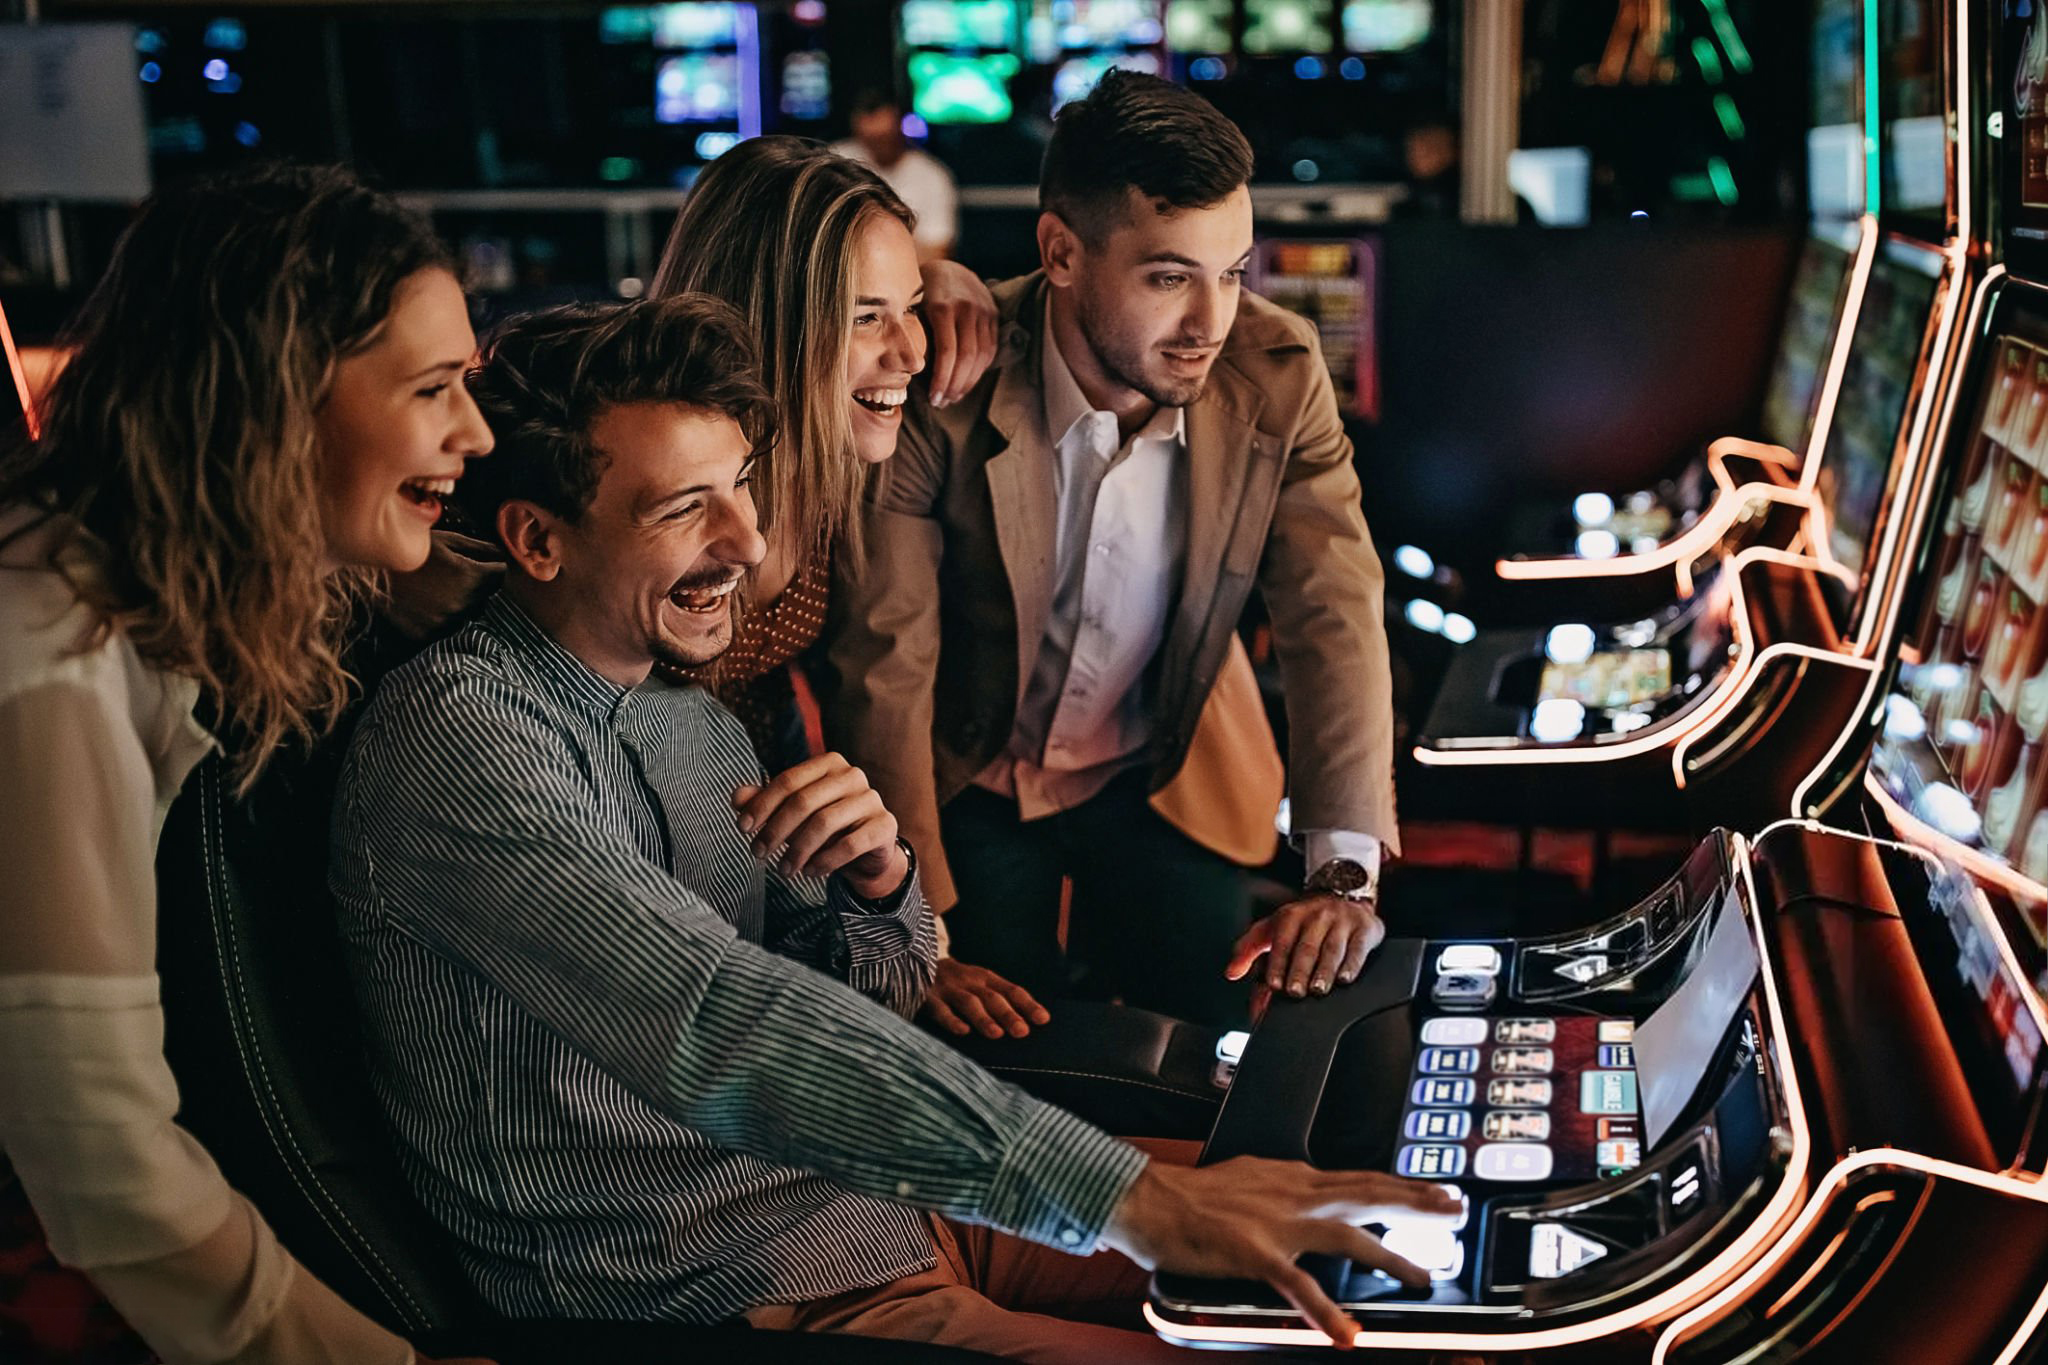 Group of friends gambling in casino